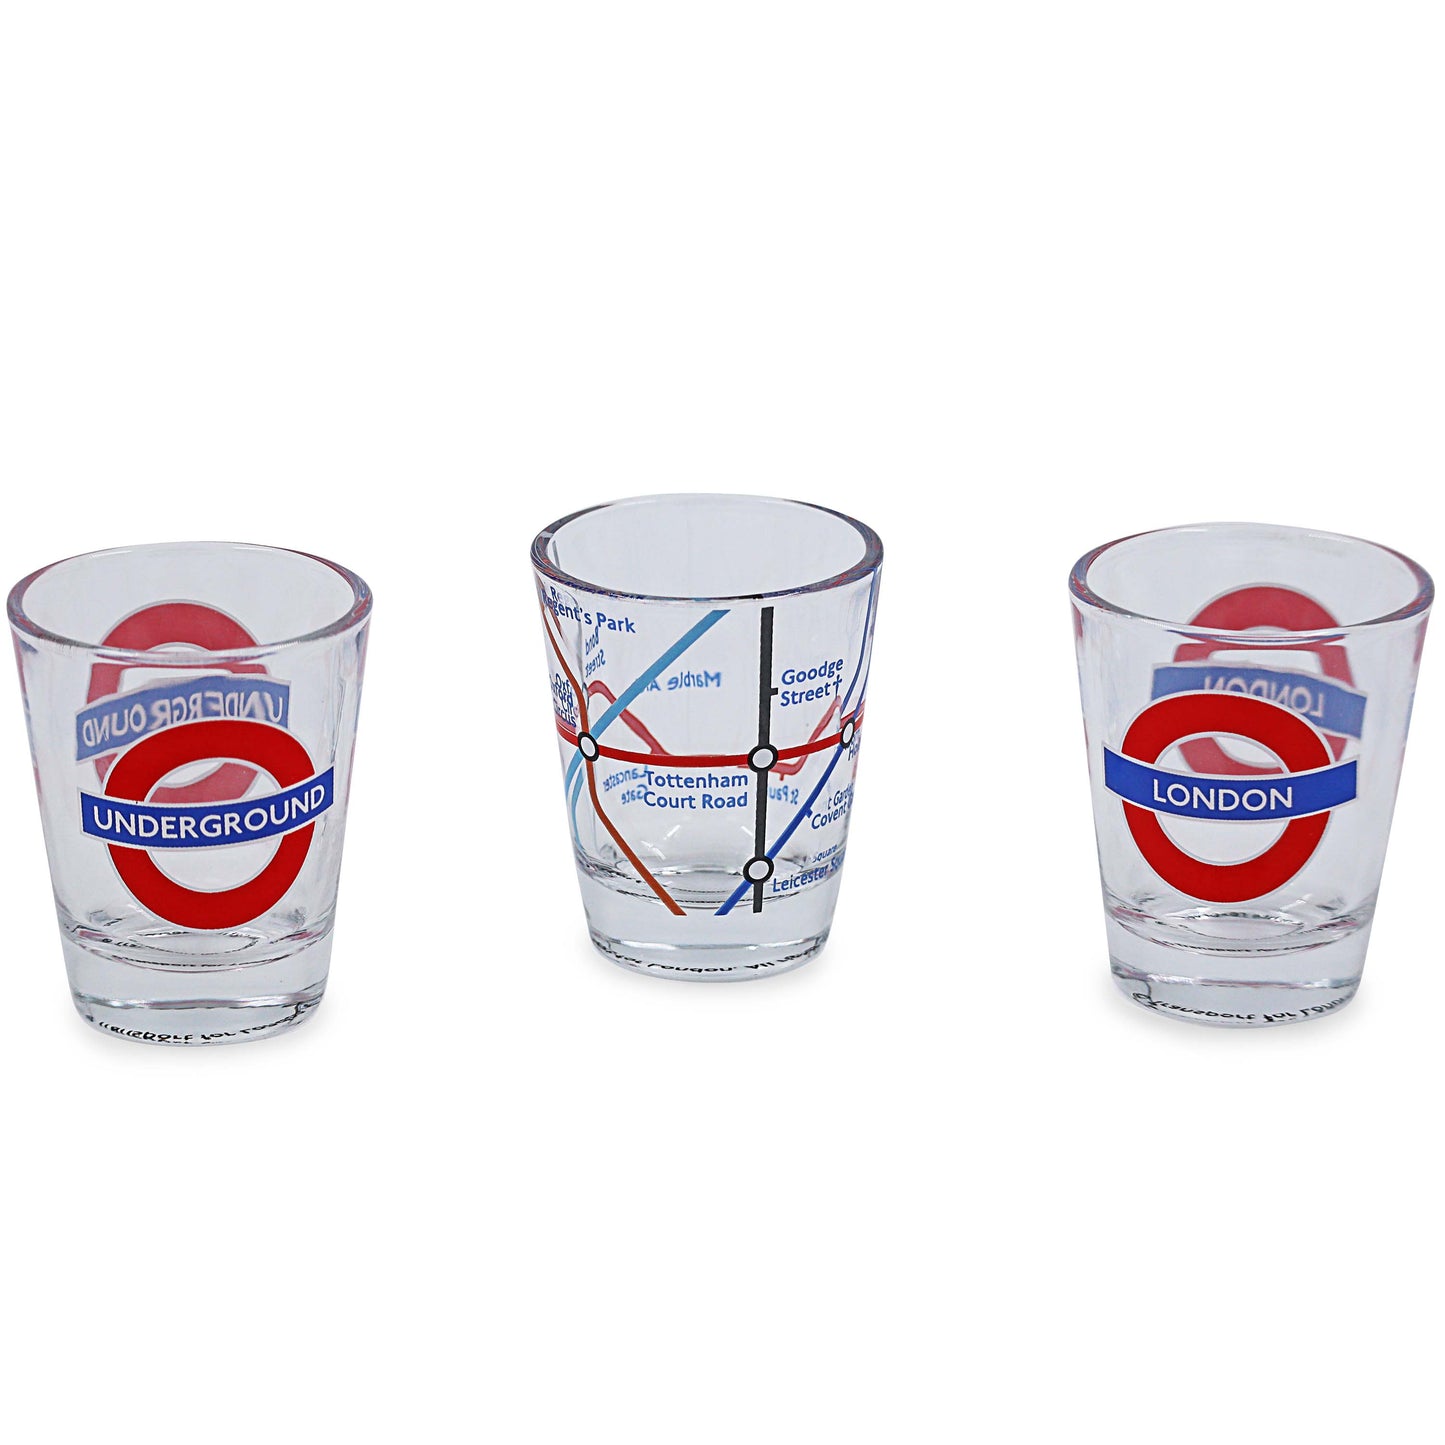 London Underground TfL shot glass gift